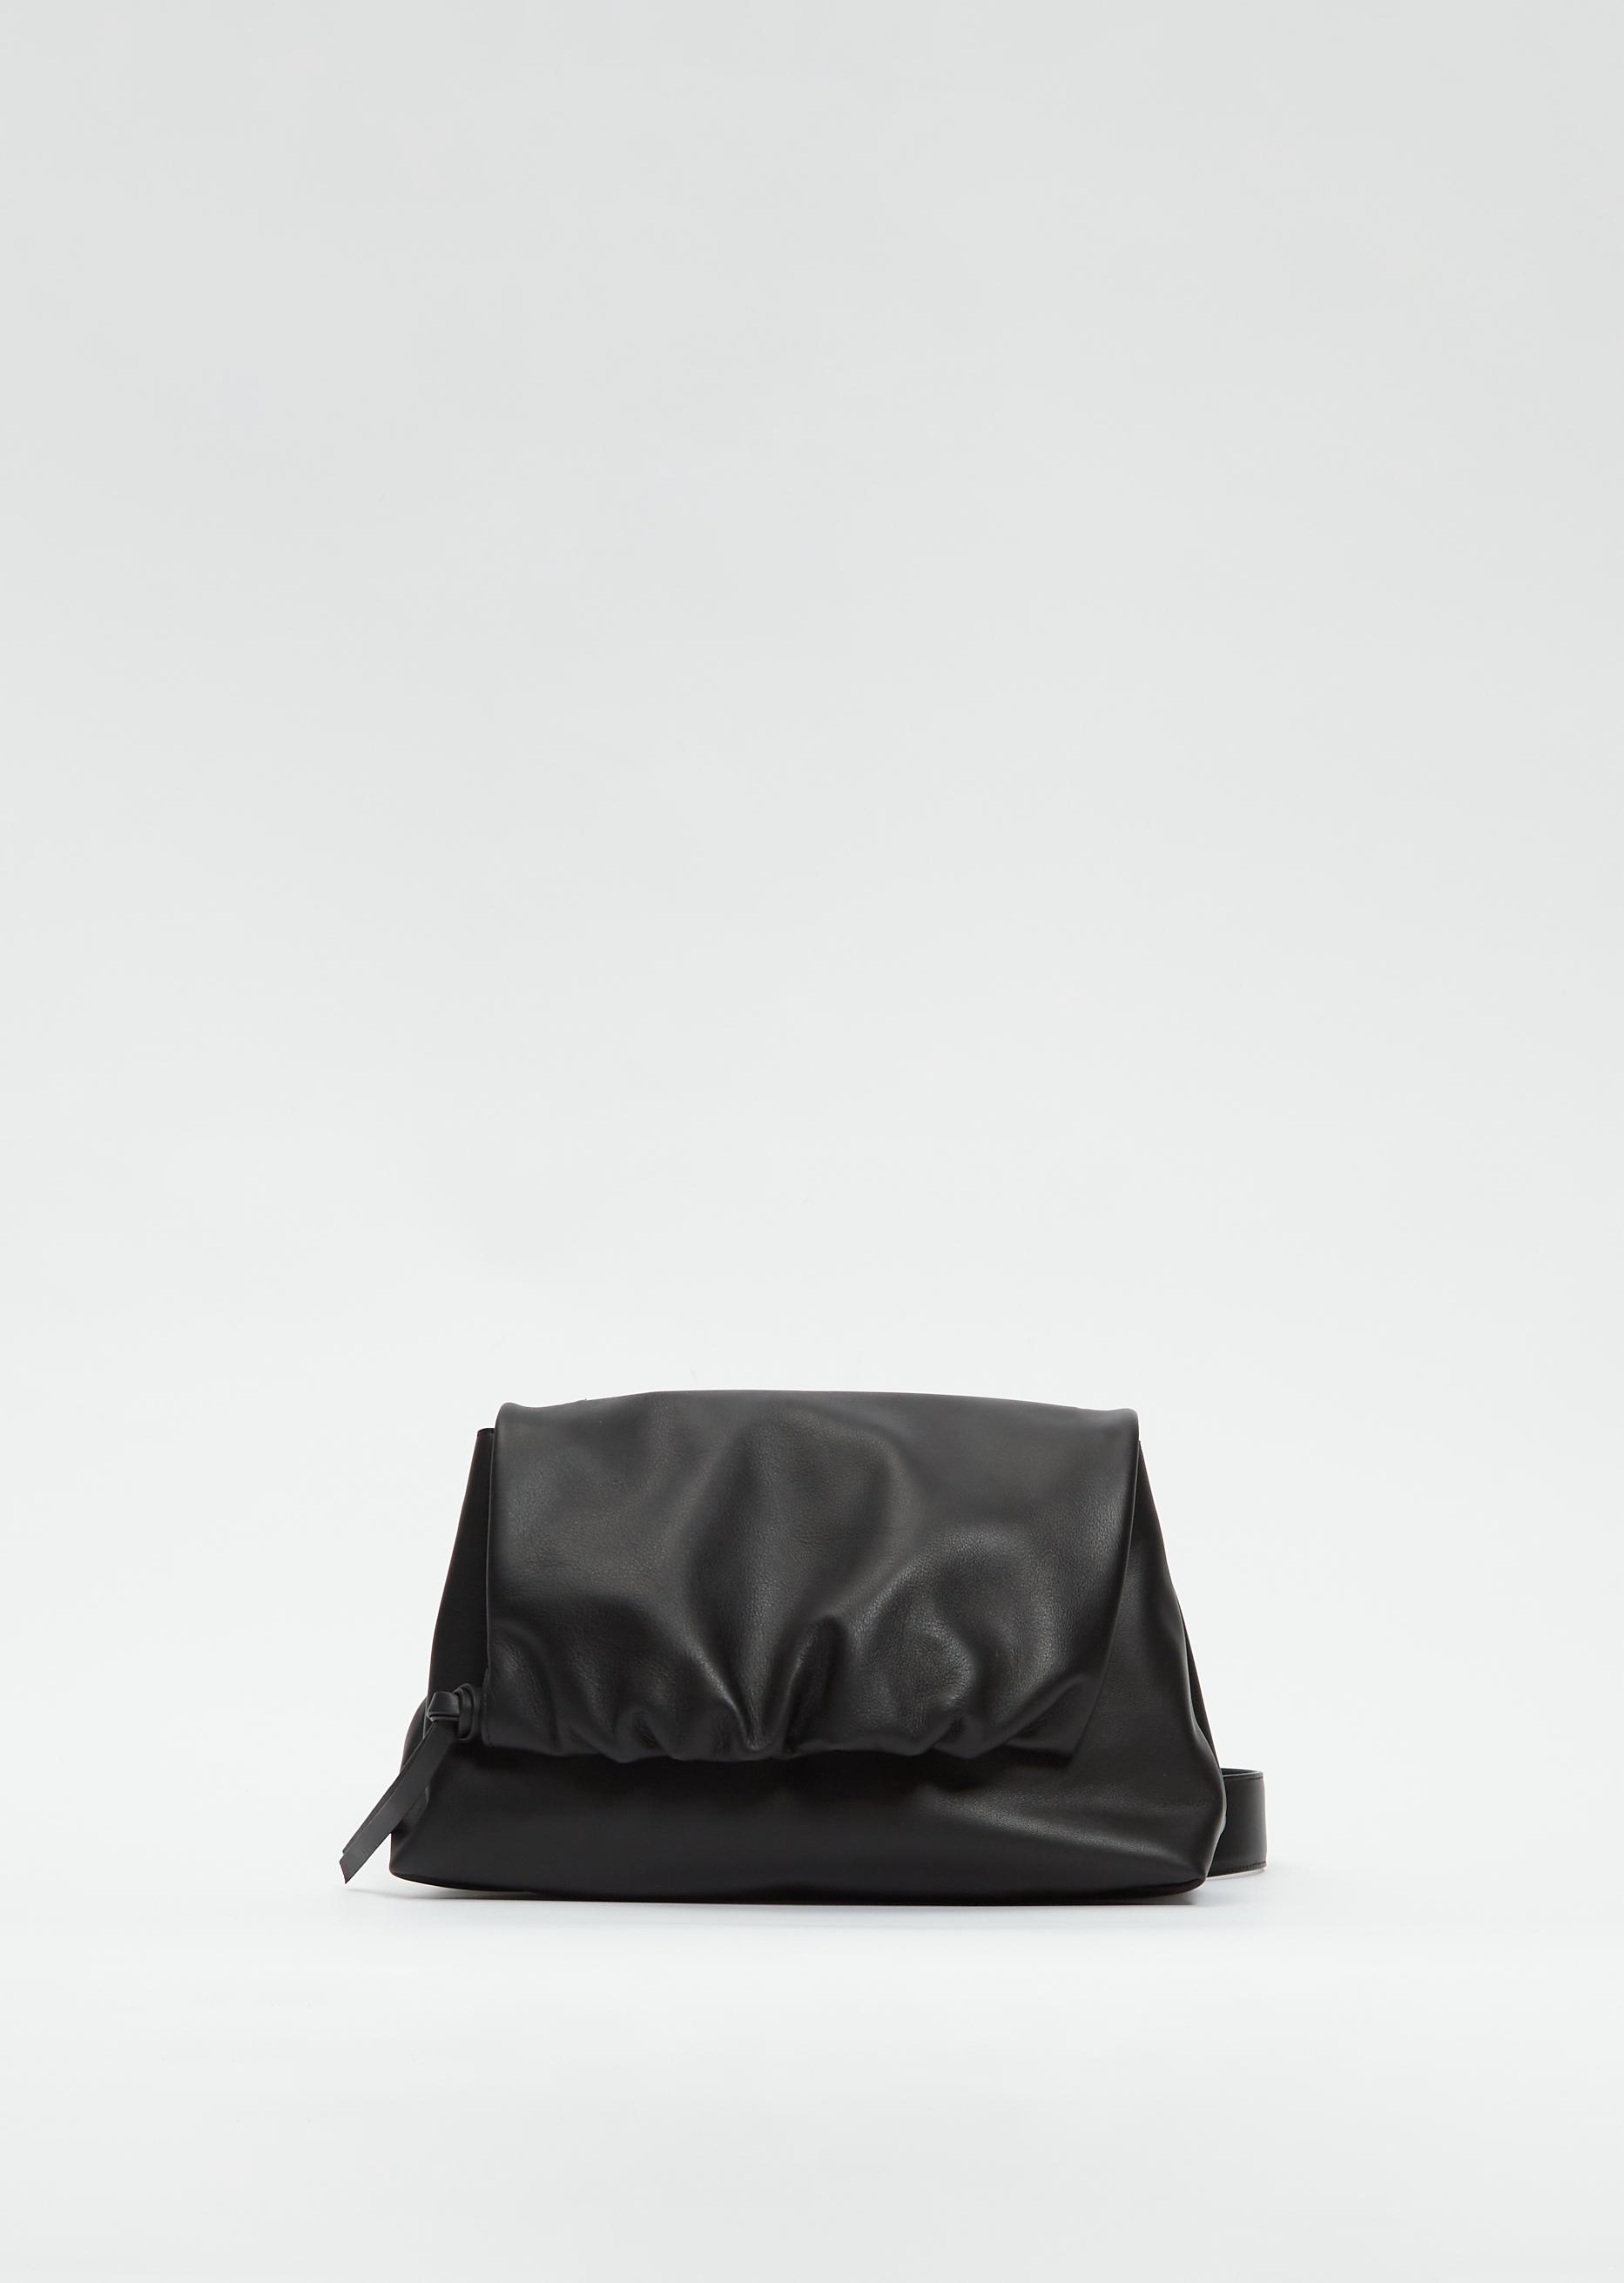 Dries Van Noten Gathered Leather Handbag in Black | Lyst